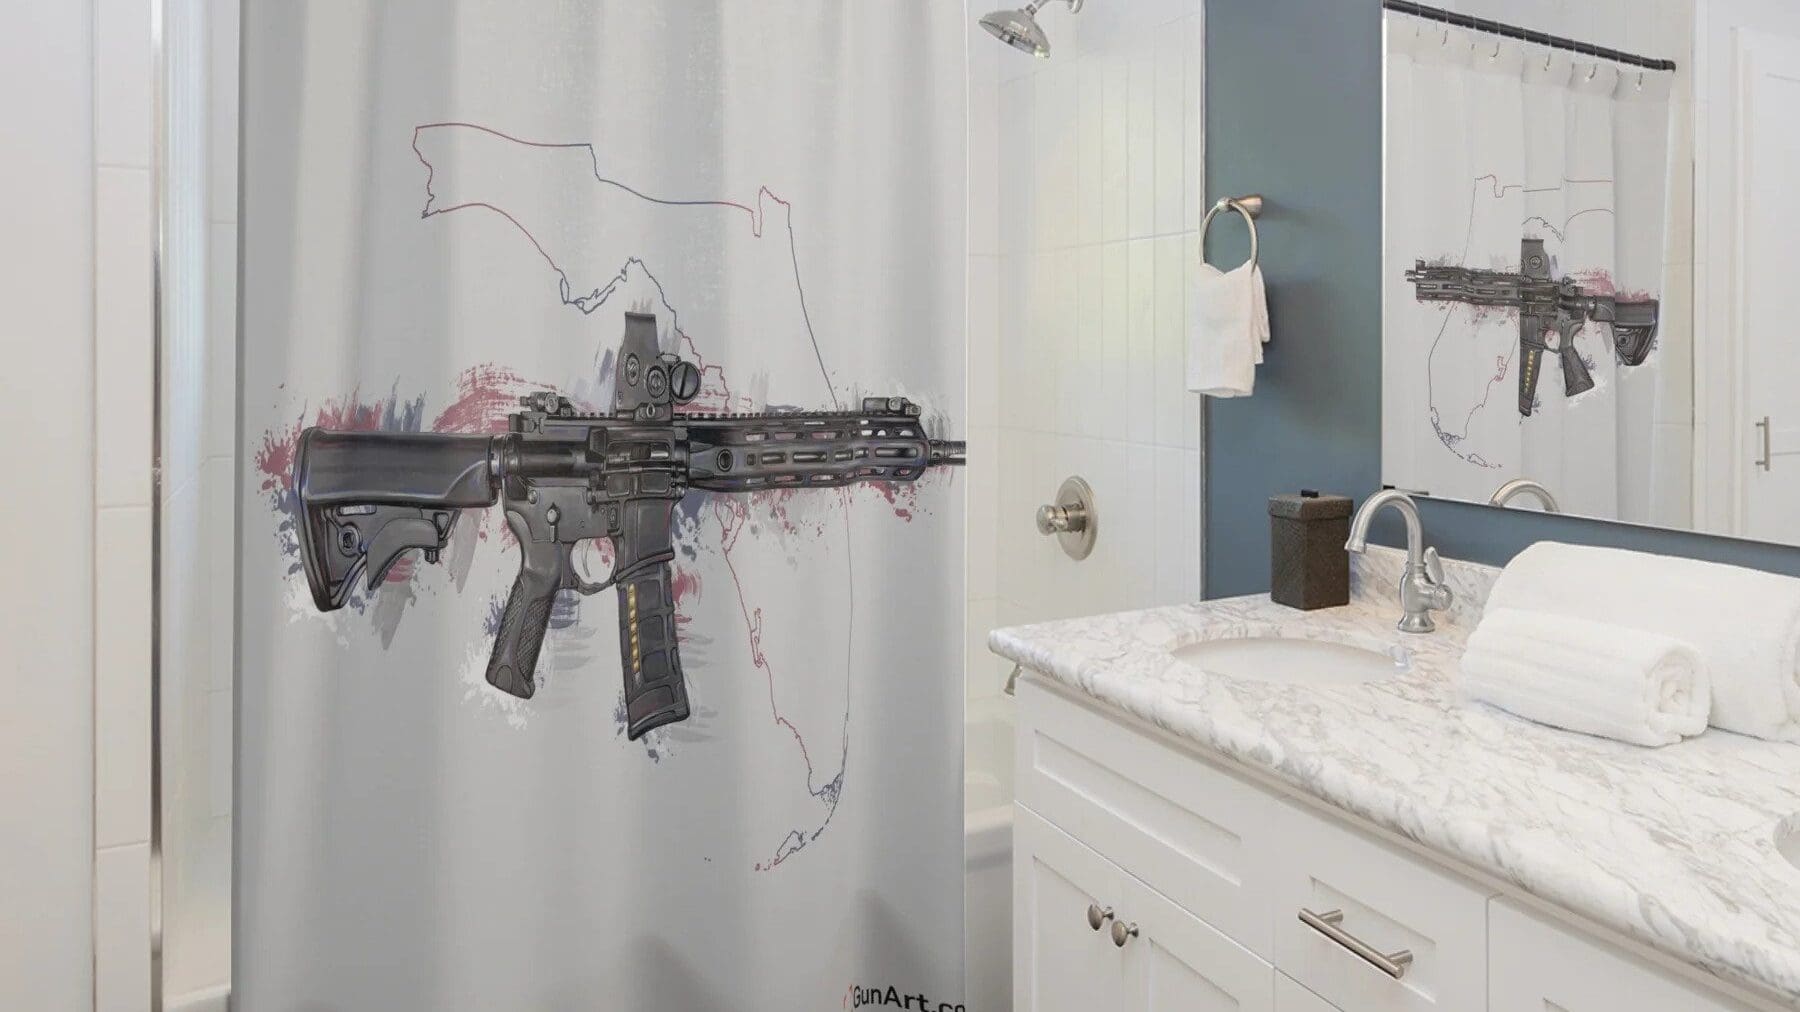 Gun Art Florida shower curtain